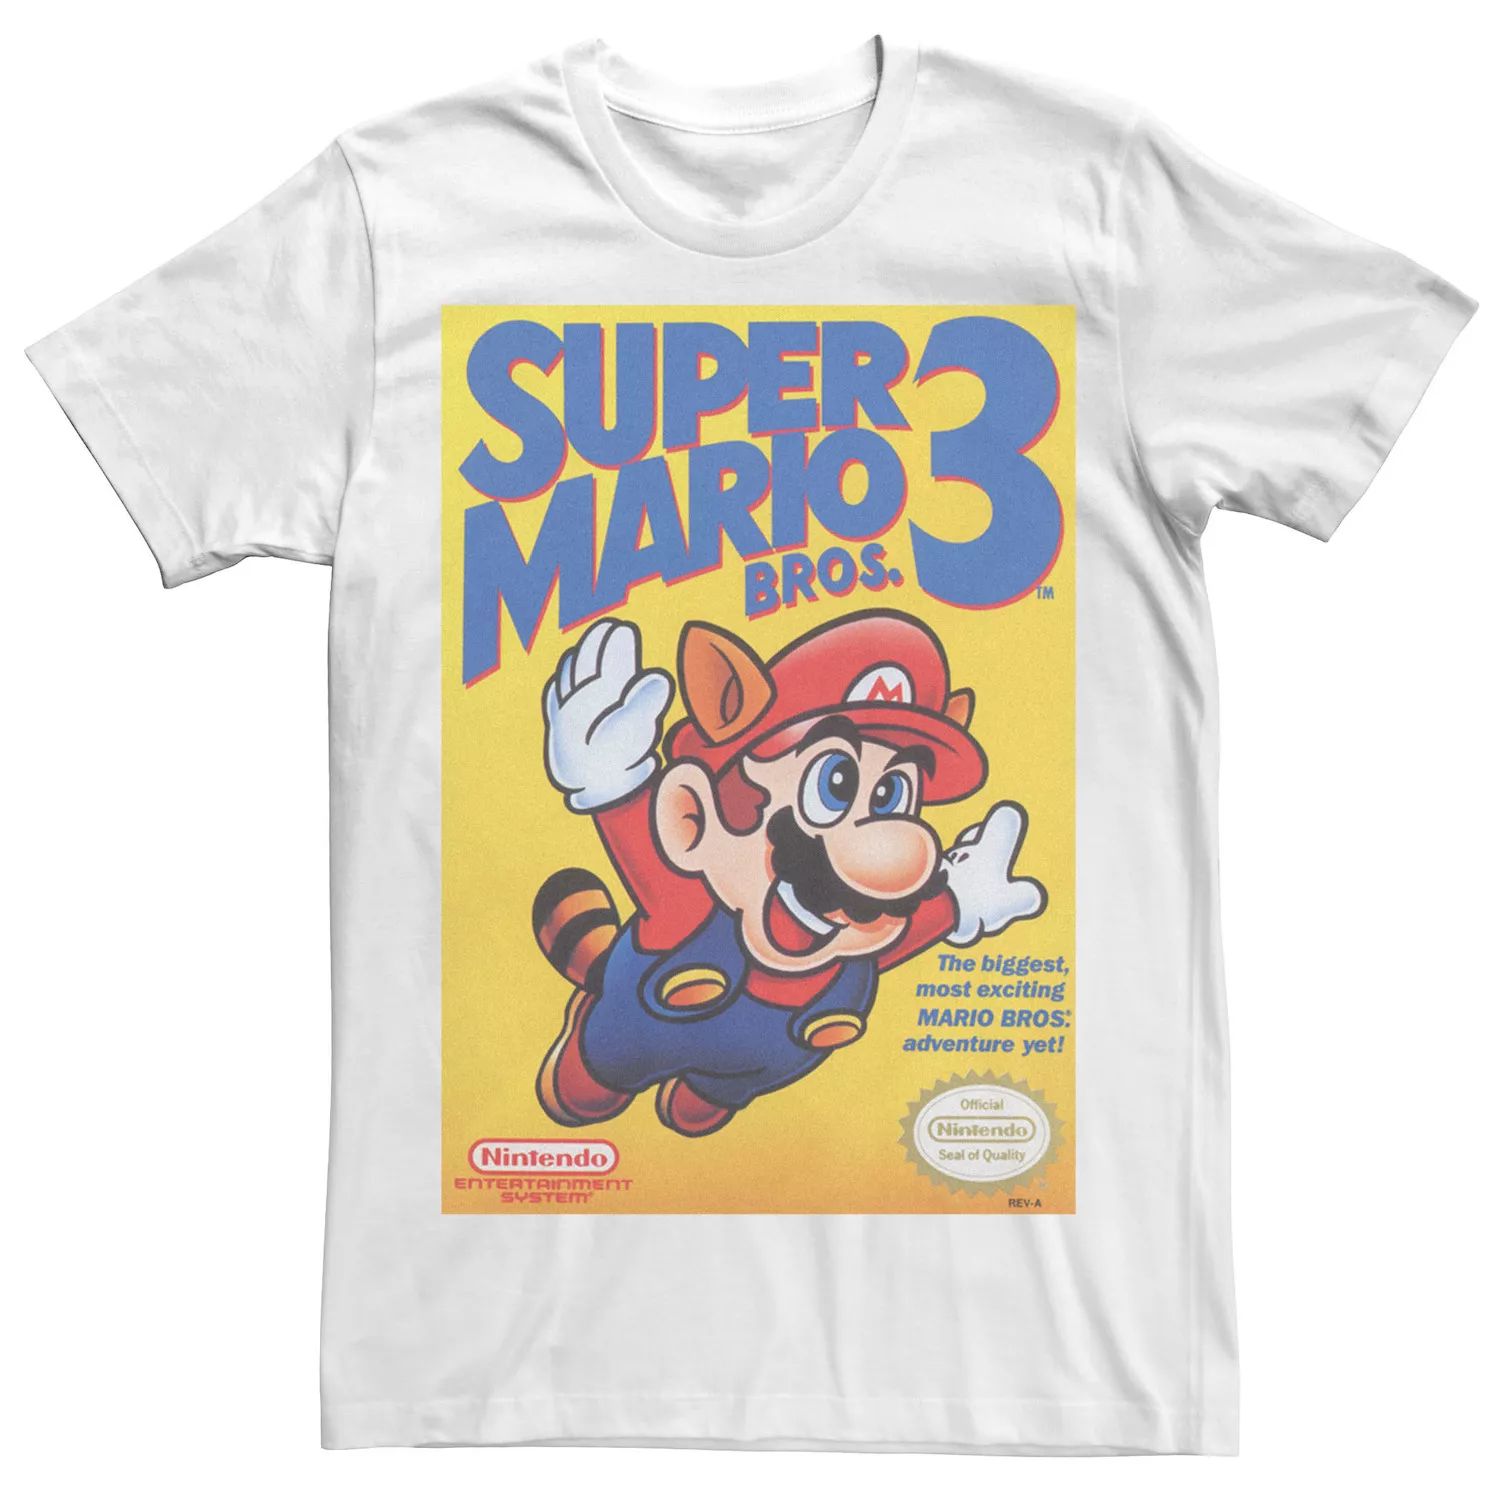 Мужская футболка с плакатом Super Mario Bros 3 Flying Raccoon Mario Licensed Character, белый